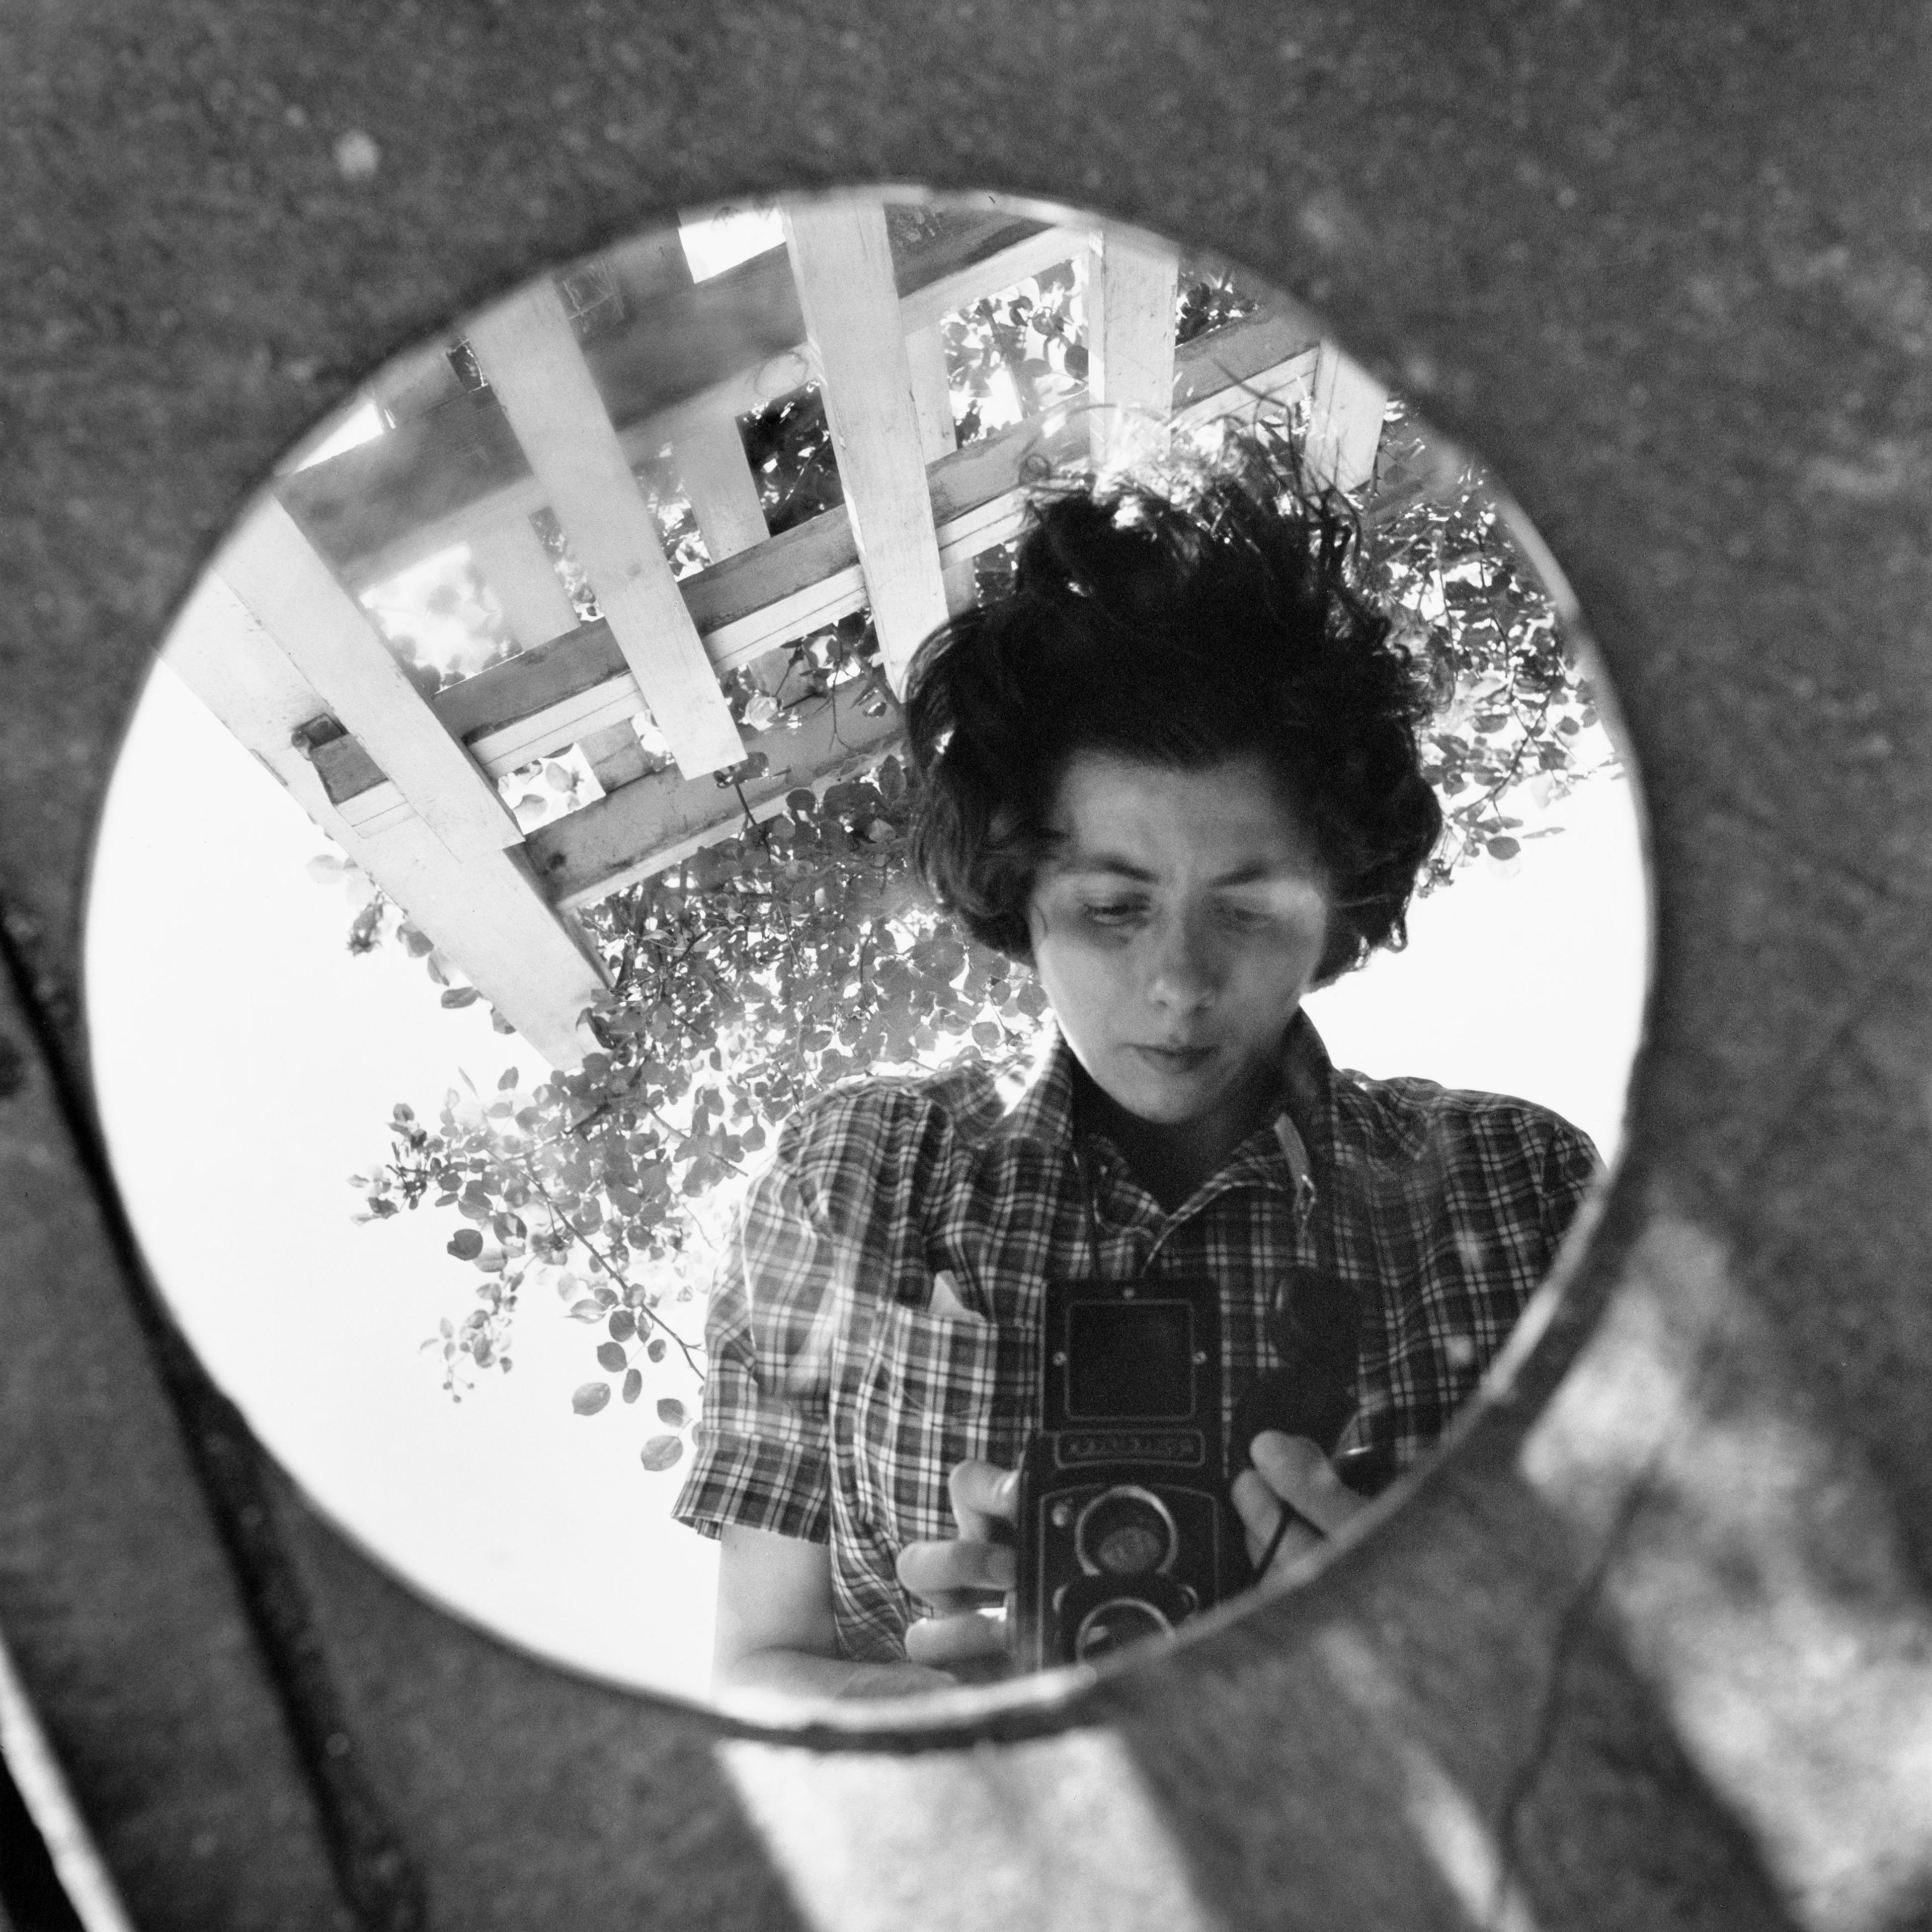 A self portrait of Vivian Maier taken in the reflection of a circular mirror